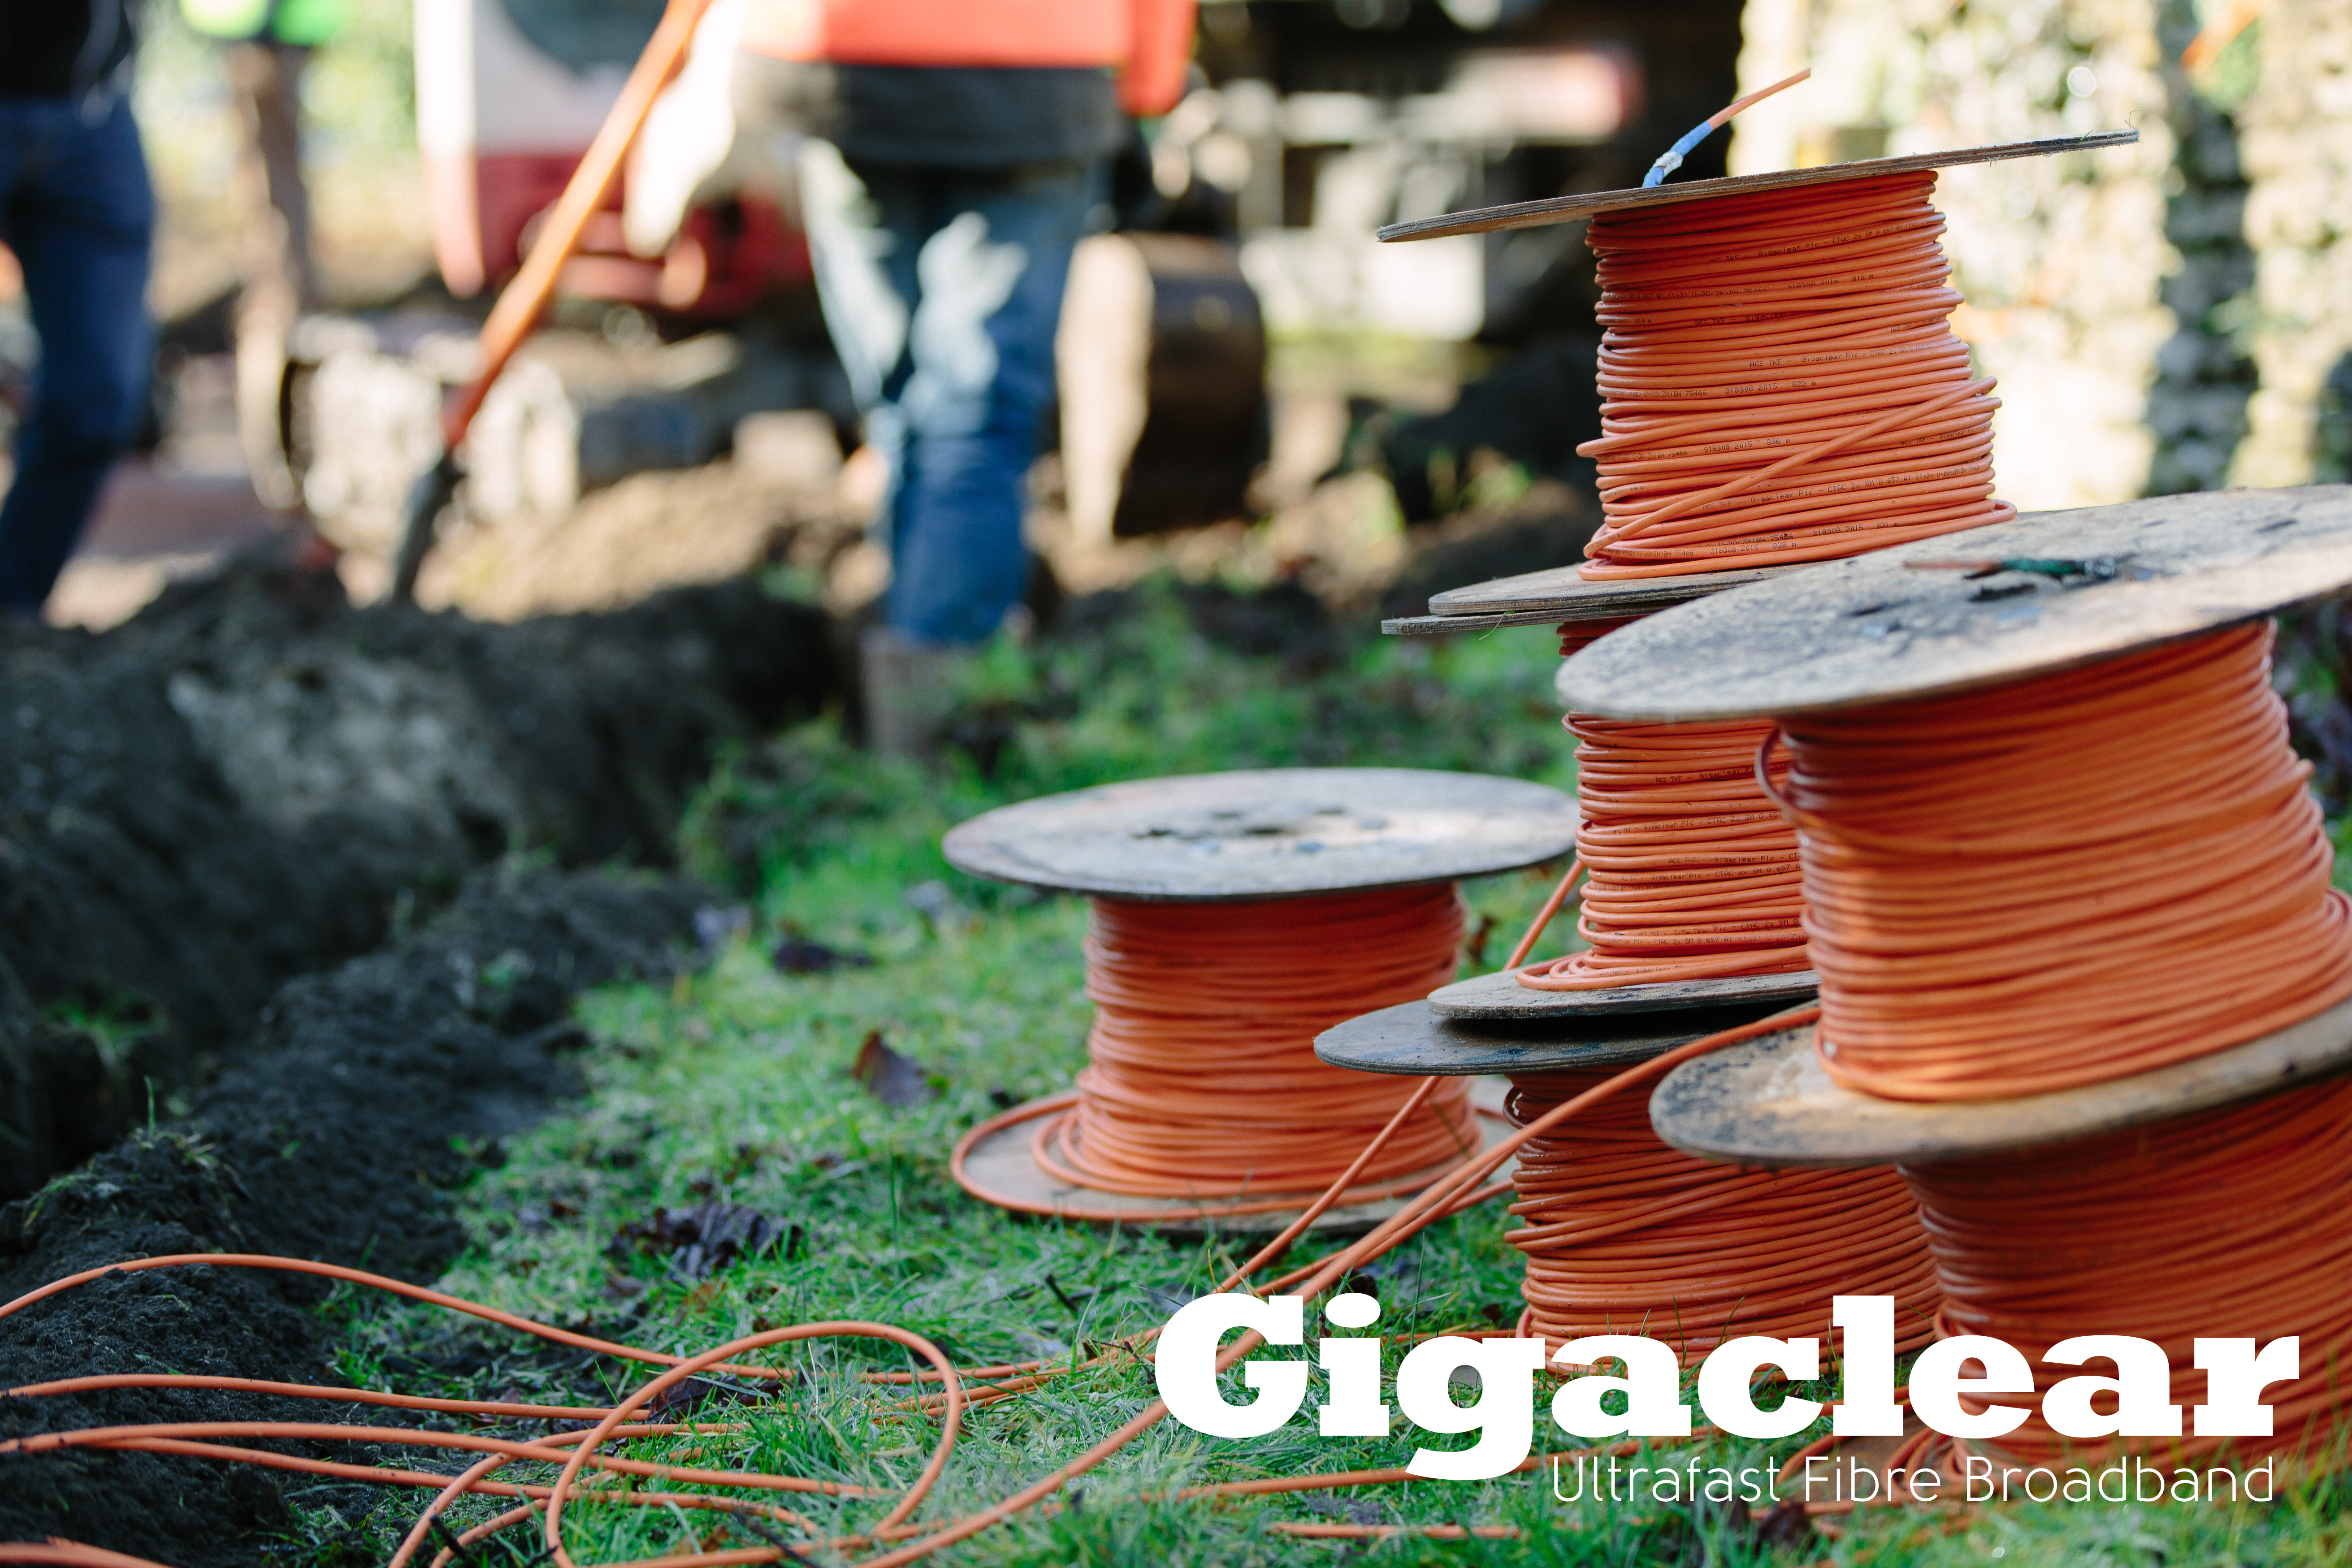 Gigaclear raises the maximum bandwidth to 5 Gigabits